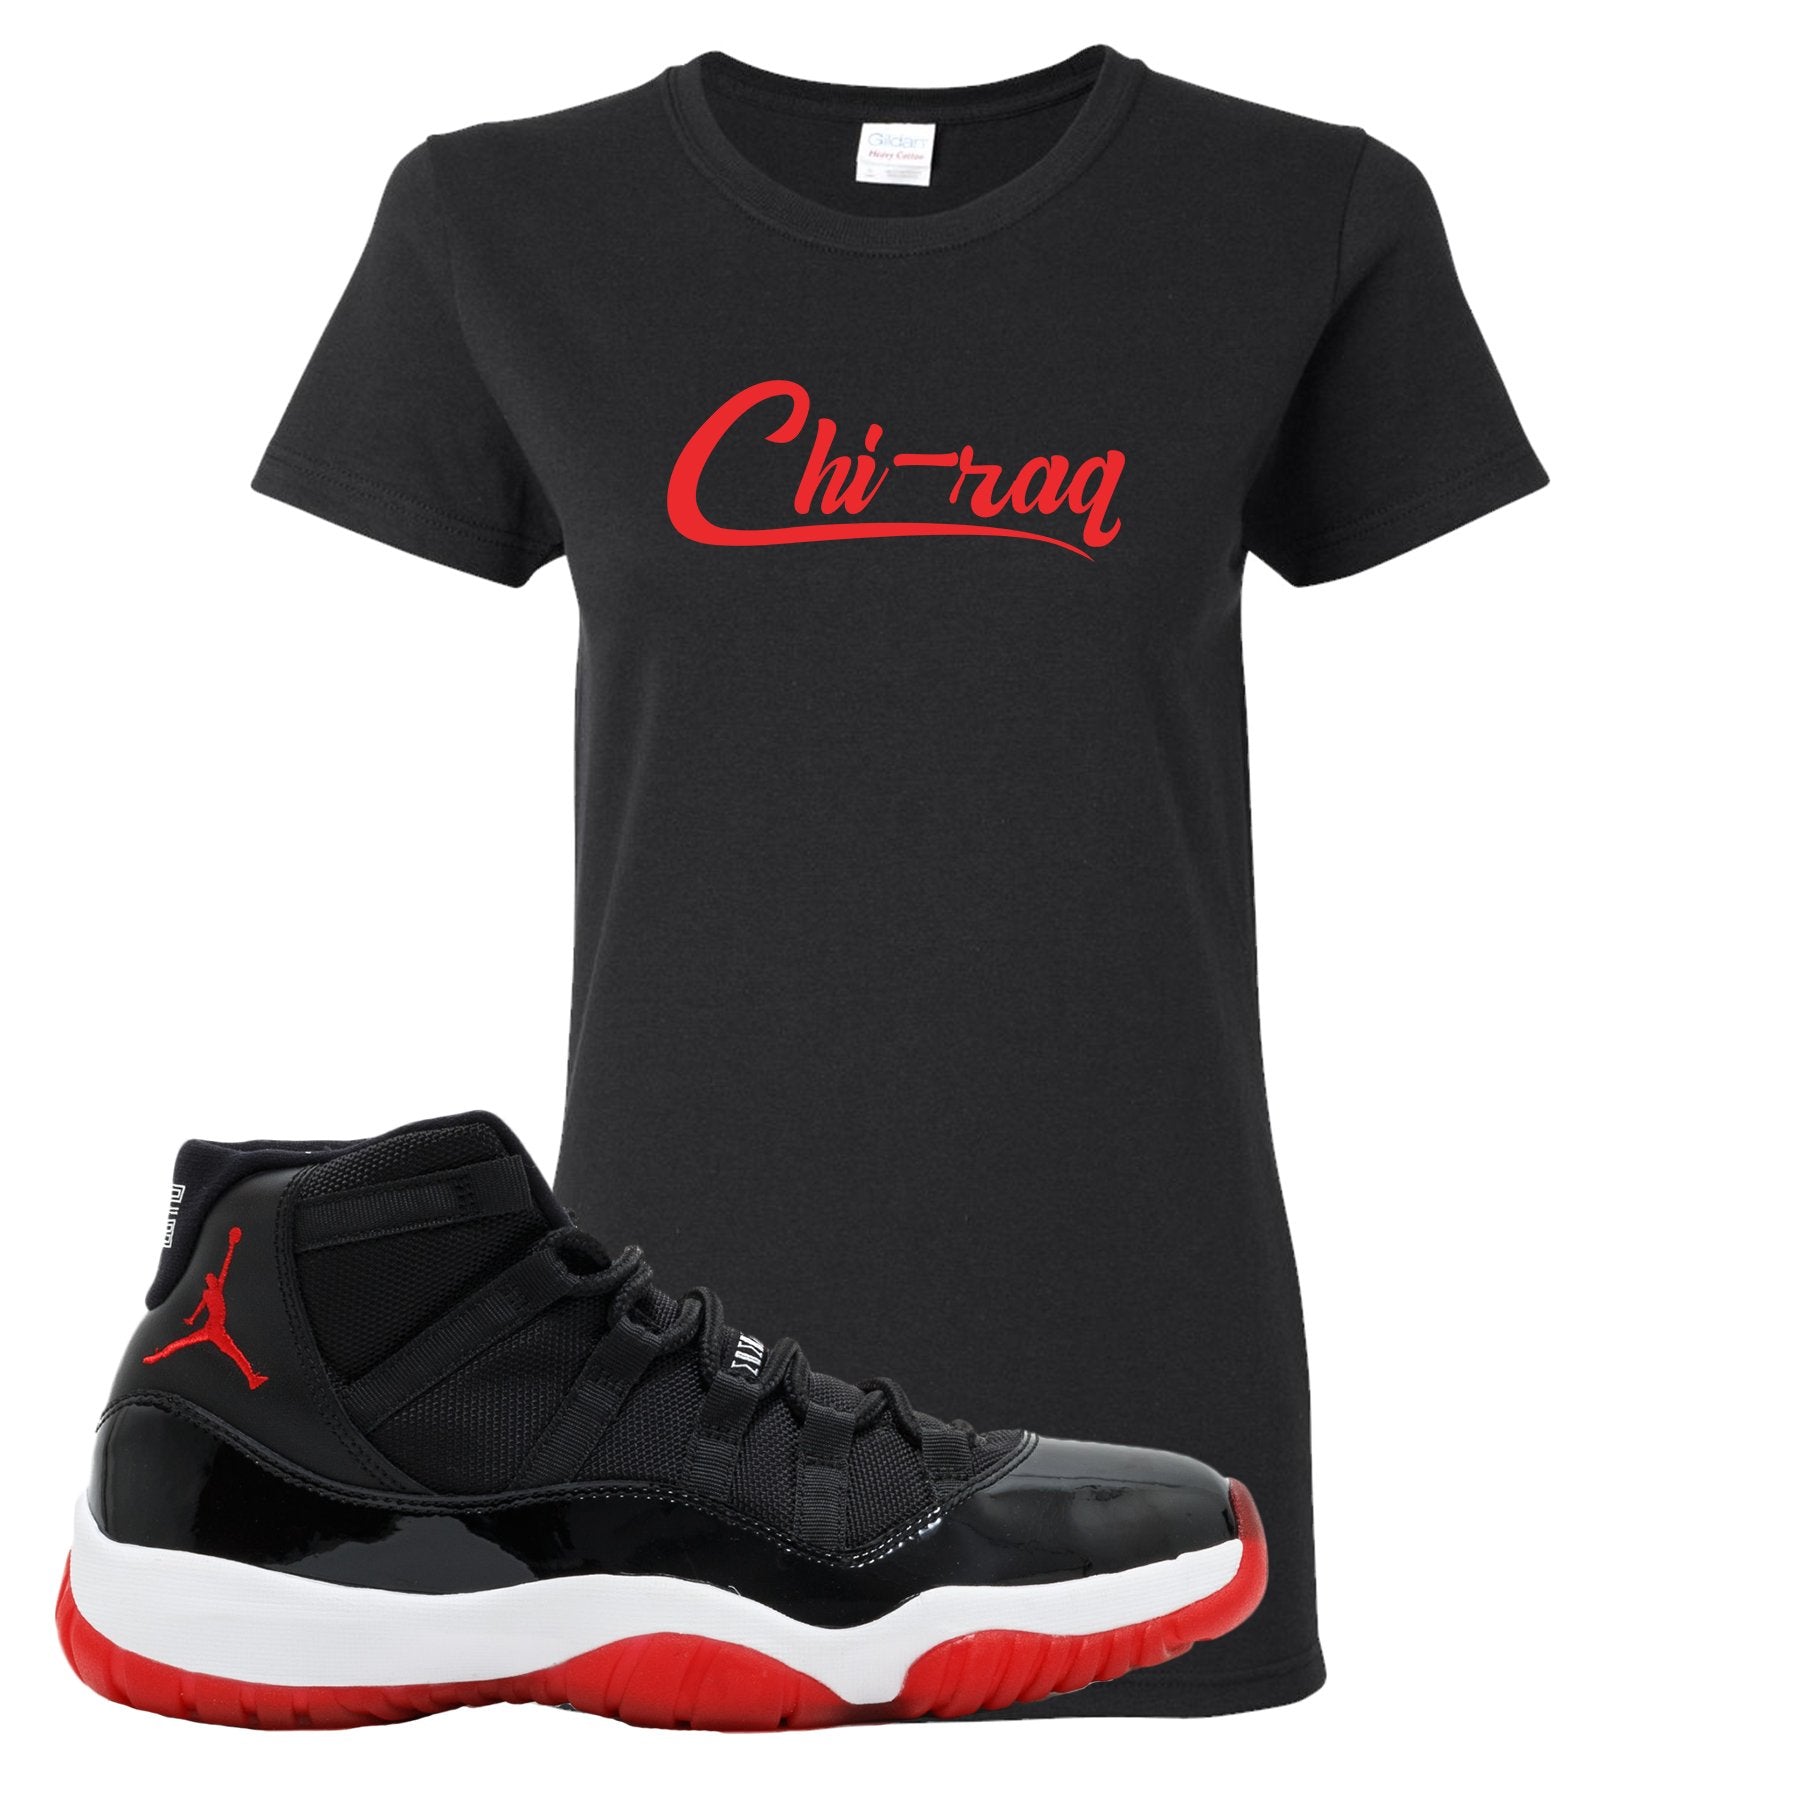 Jordan 11 Bred Chi-raq Black Sneaker Hook Up Women's T-Shirt